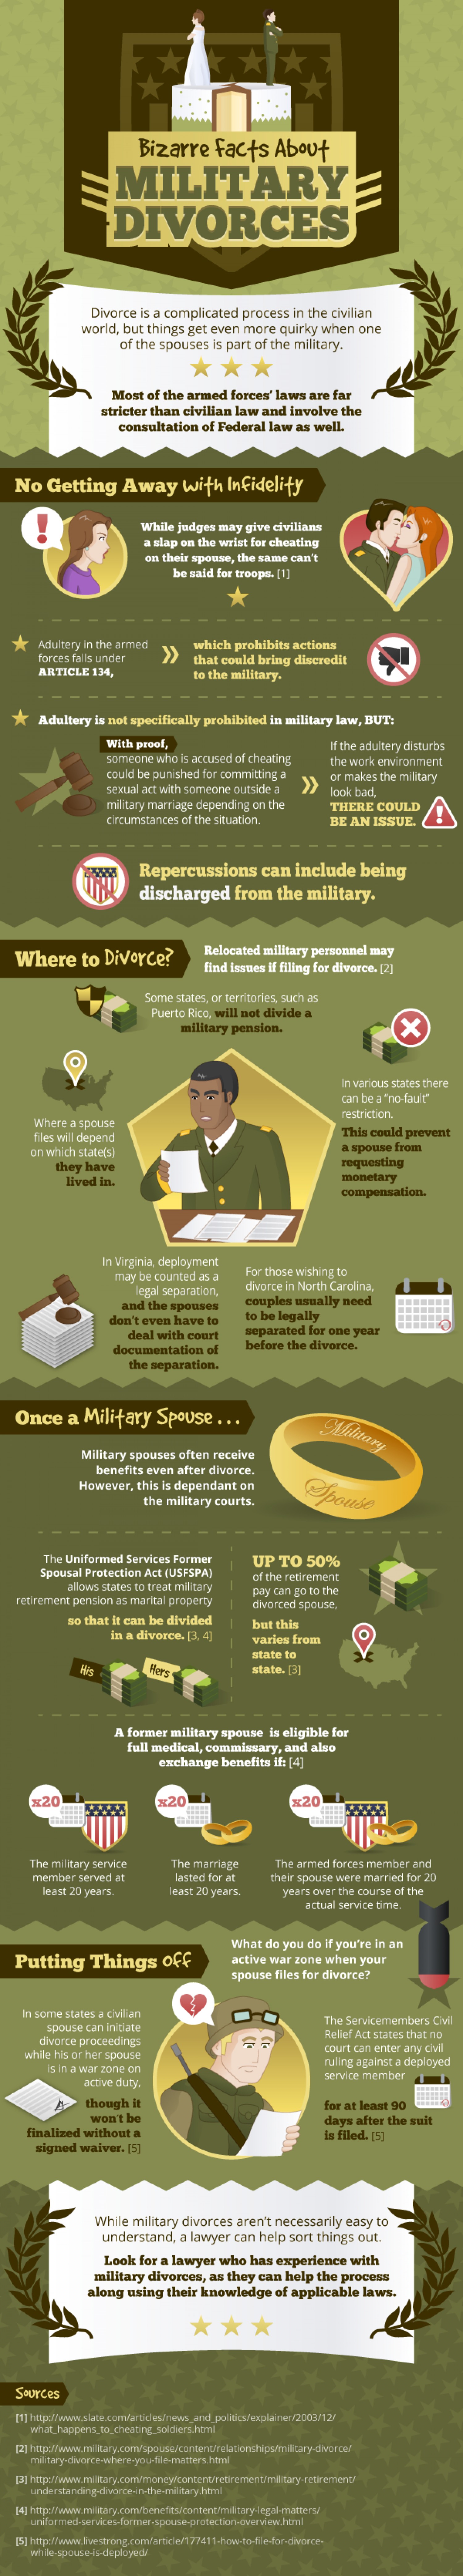 Bizarre Facts About Military Divorces